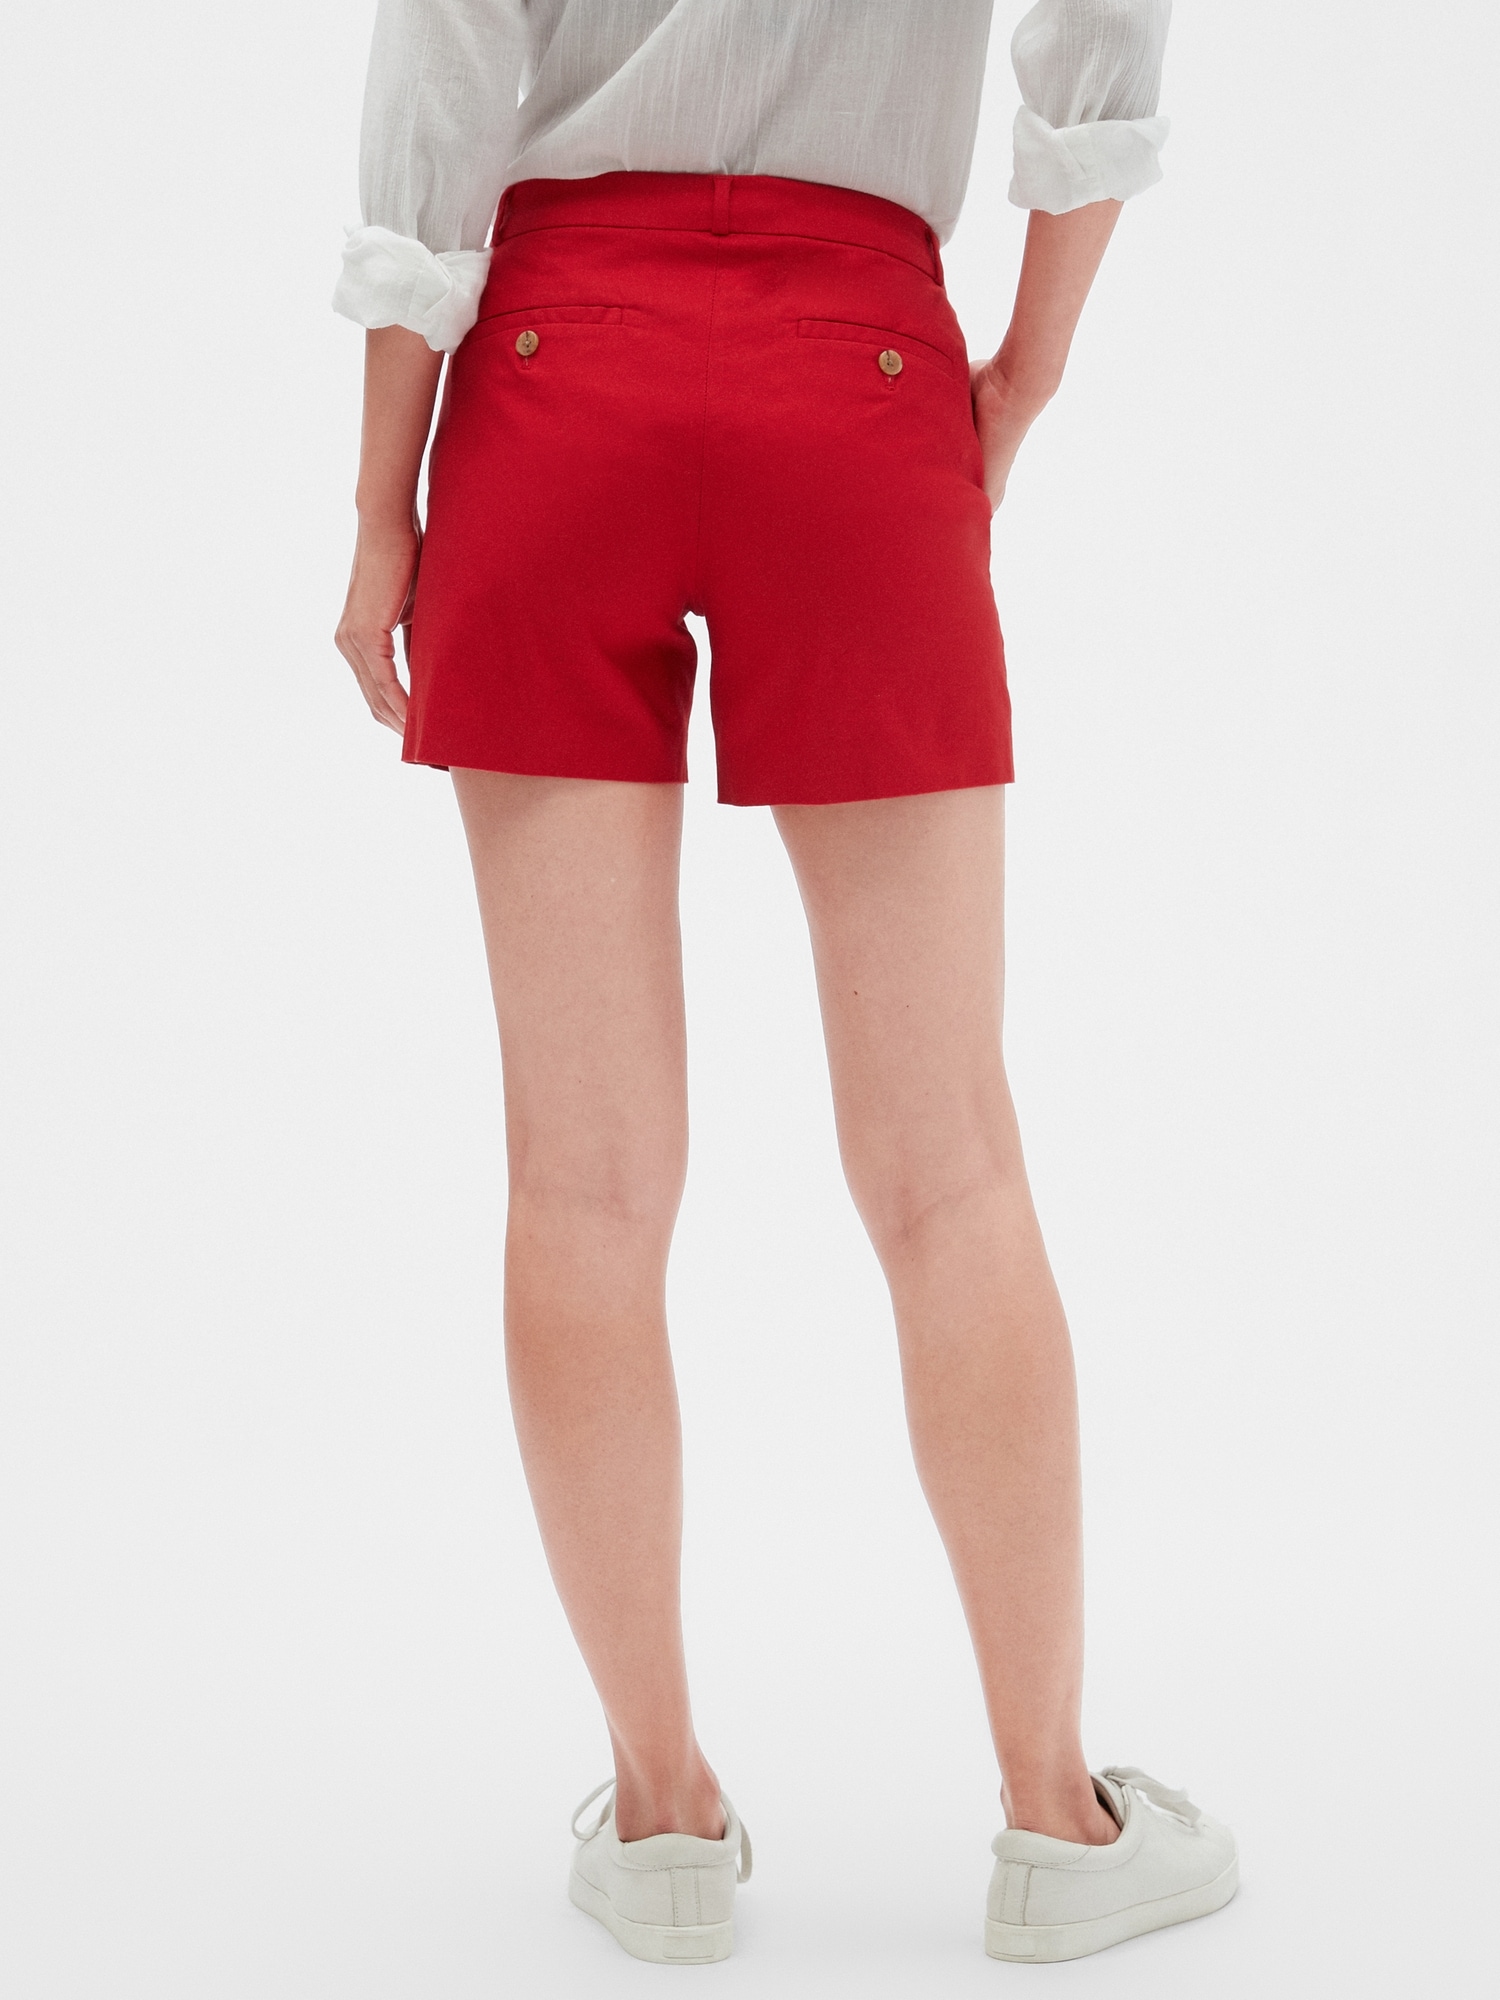 Tailored Pique Shorts - 5 inch inseam